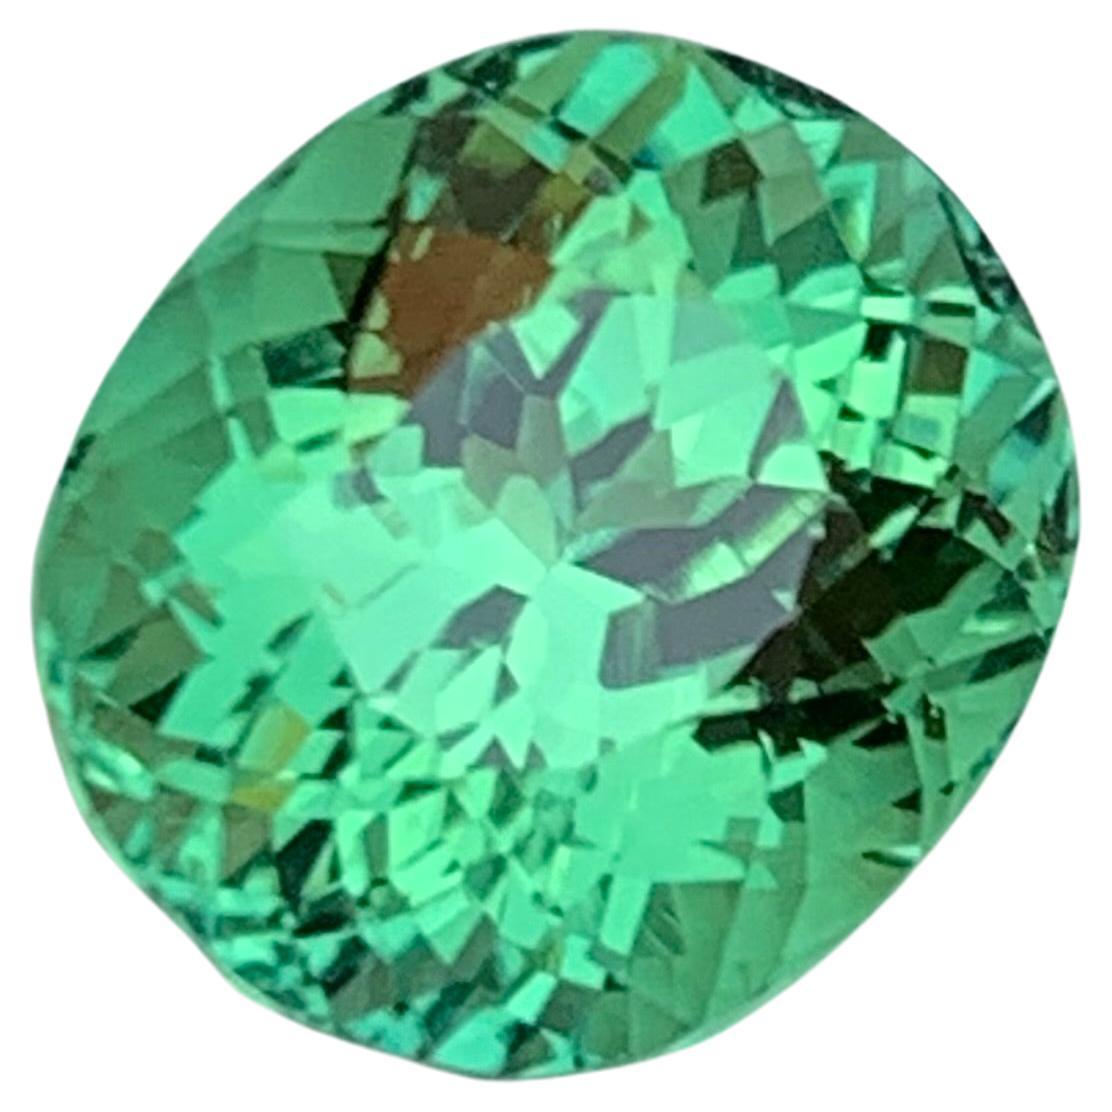 Rare tourmaline naturelle vert bleuté taille coussin fantaisie, 5,50 carats en vente